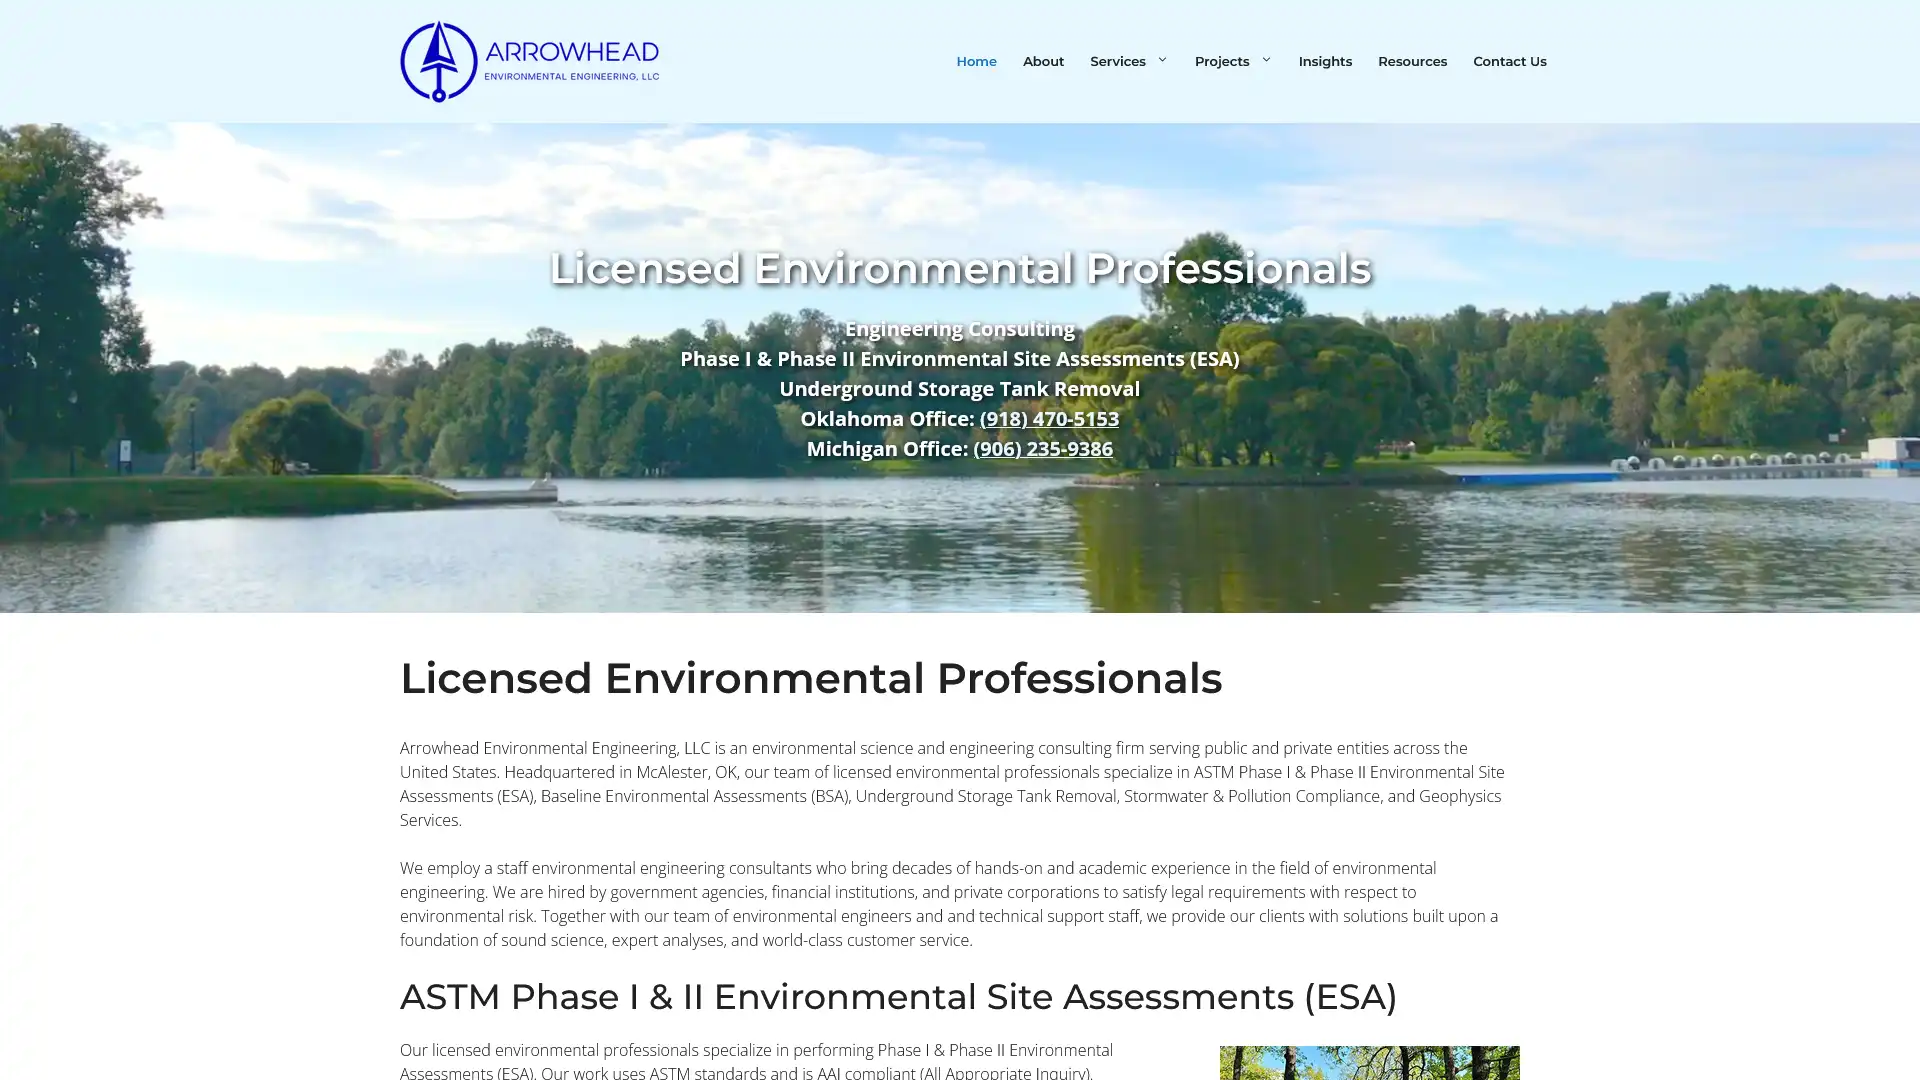 Arrowhead Environmental Engineering